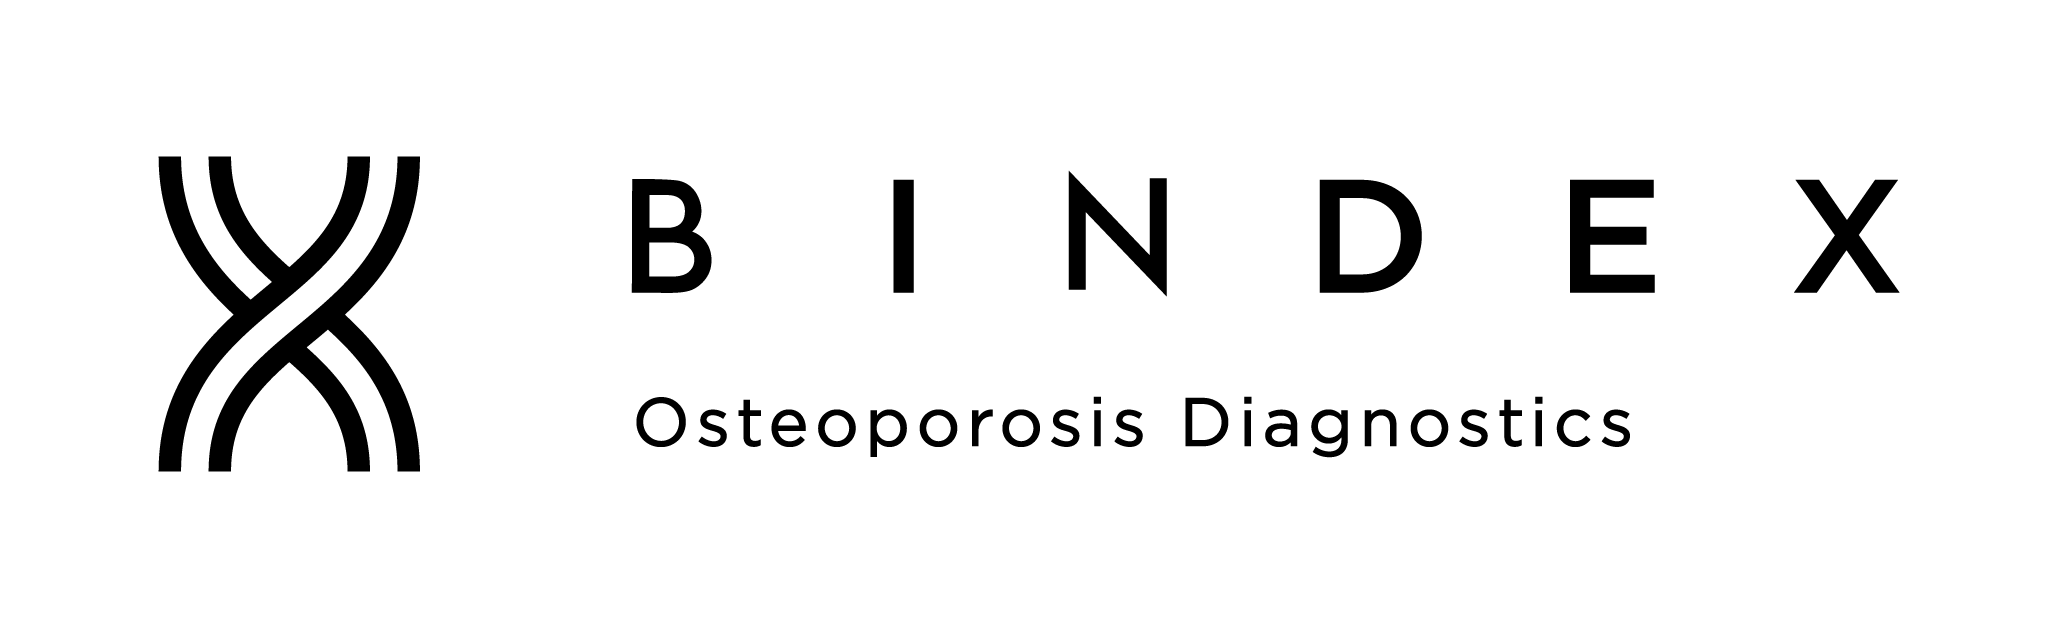 Bindex logo